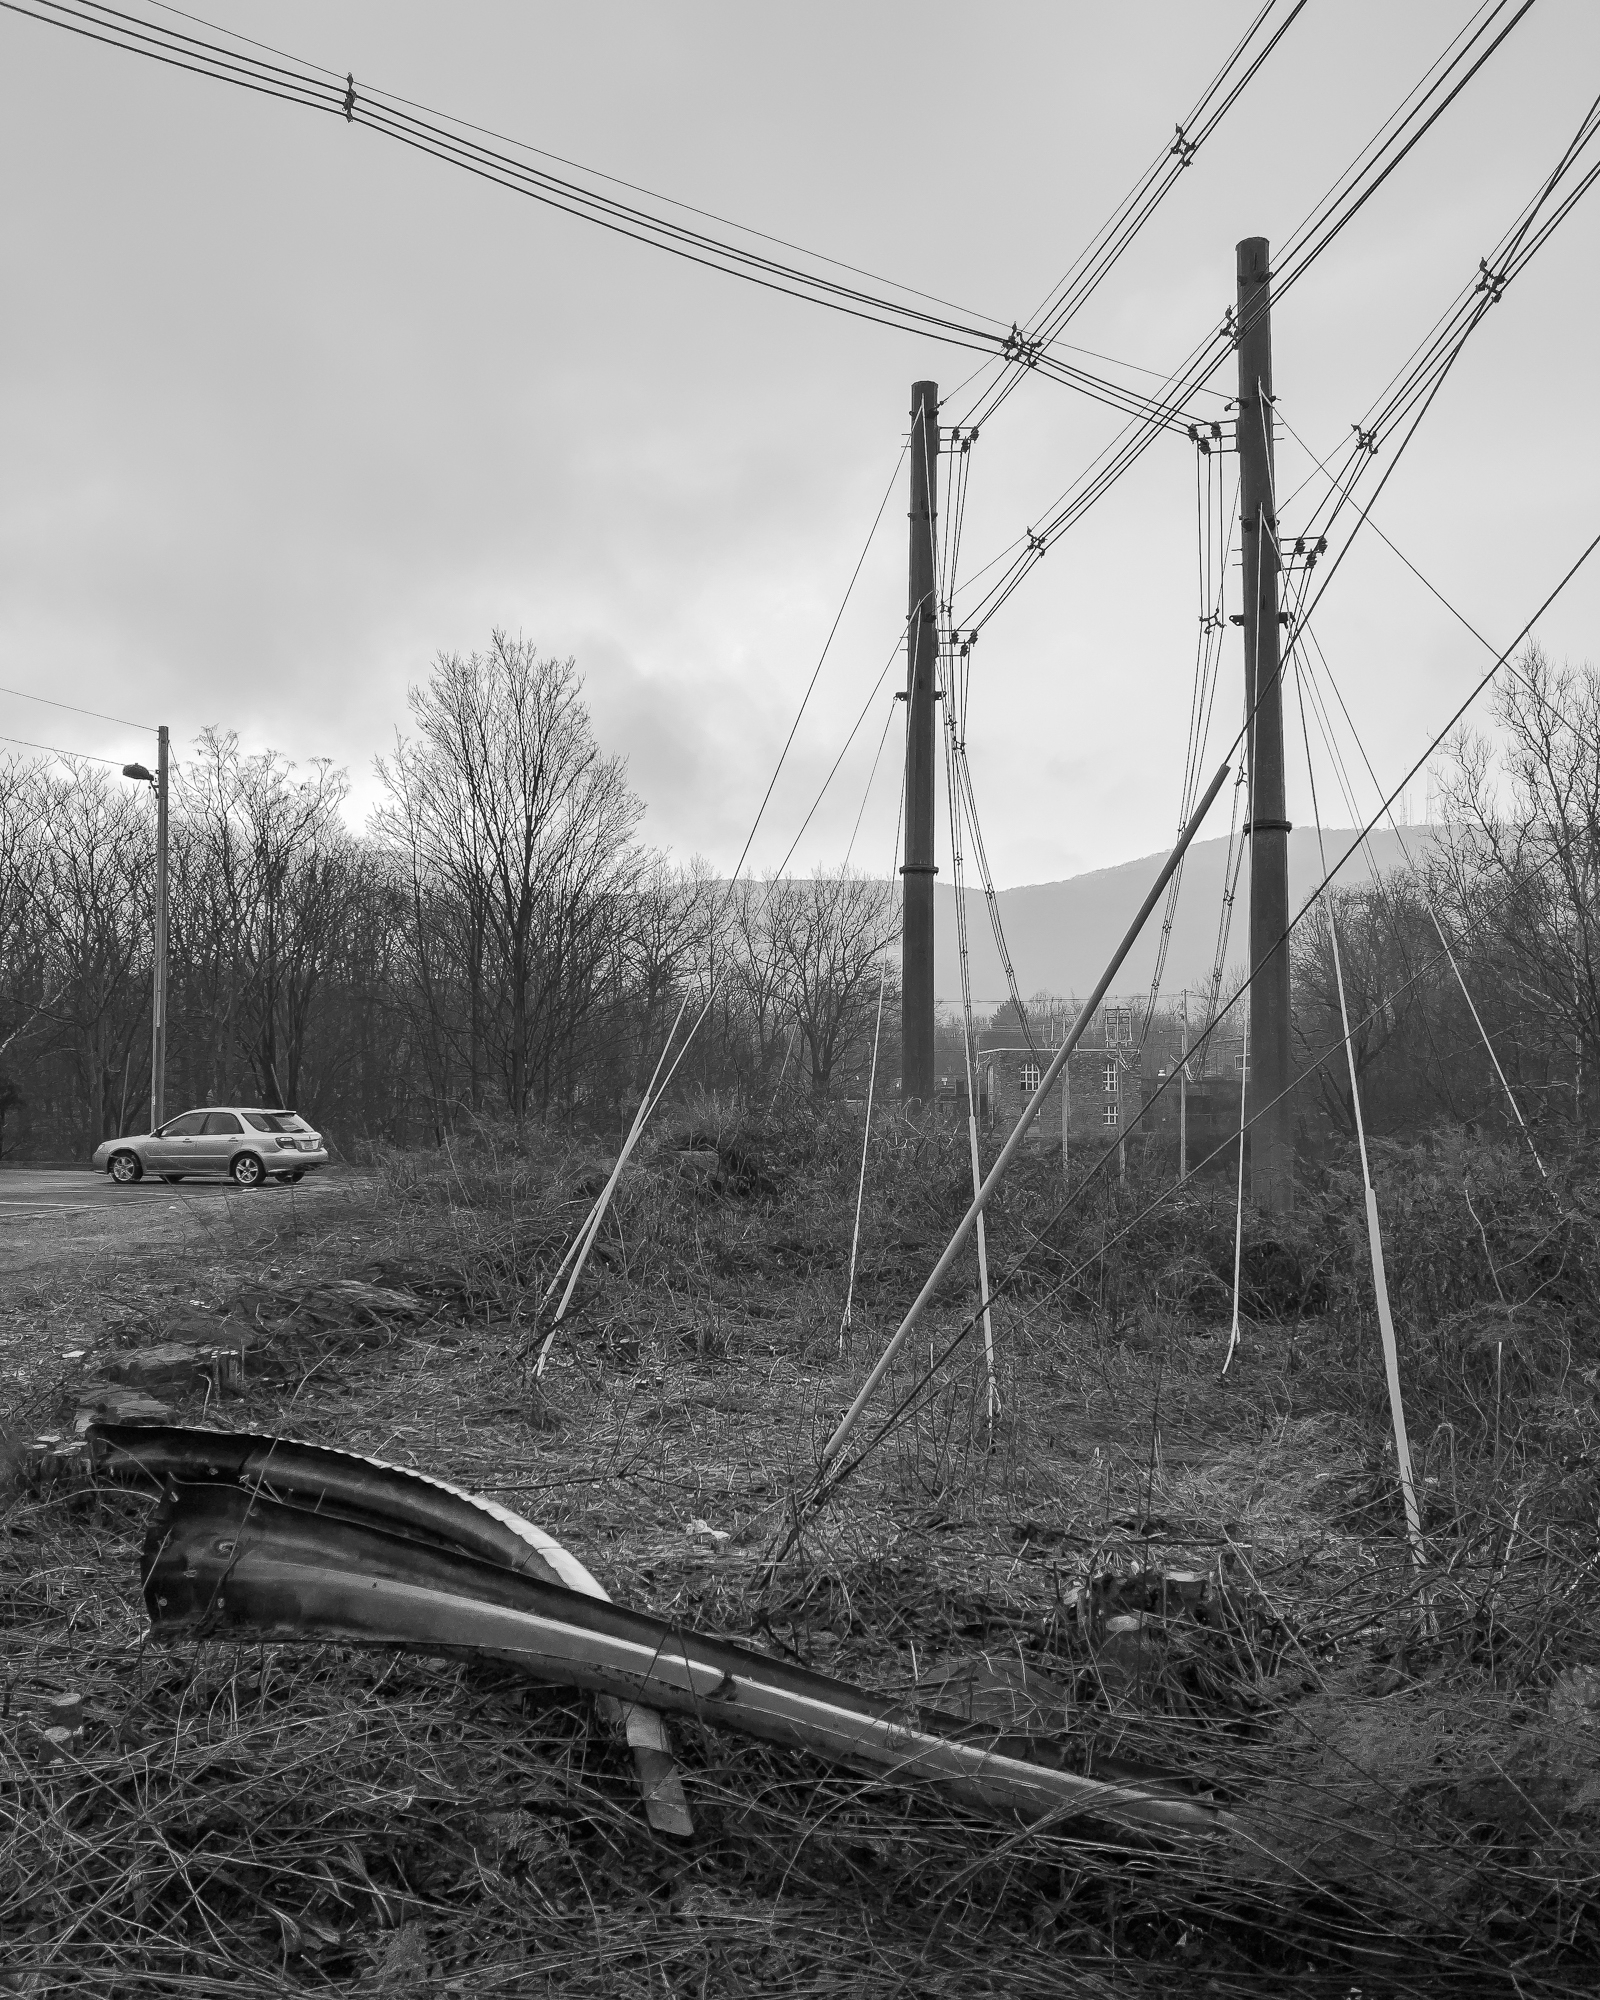 landscape with utility poles